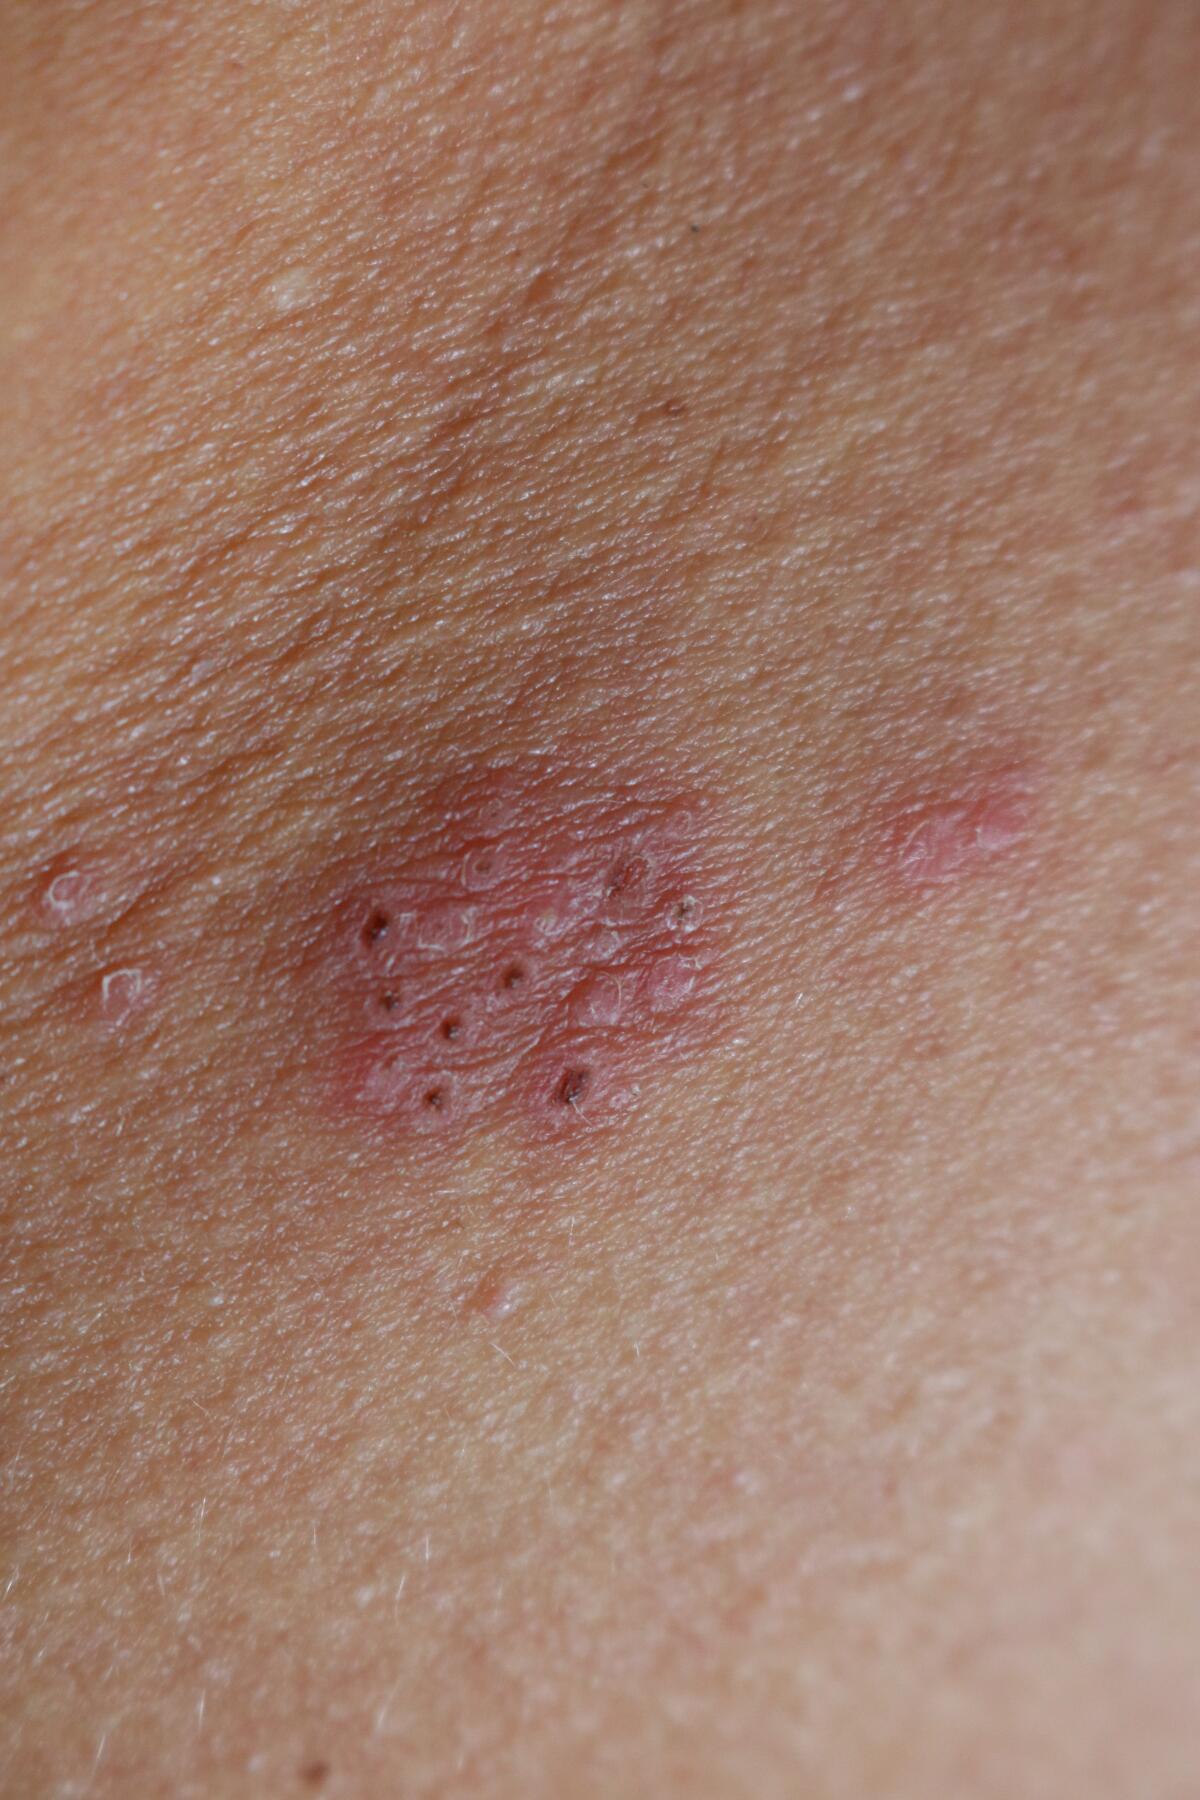 A reddish skin rash with dark spots